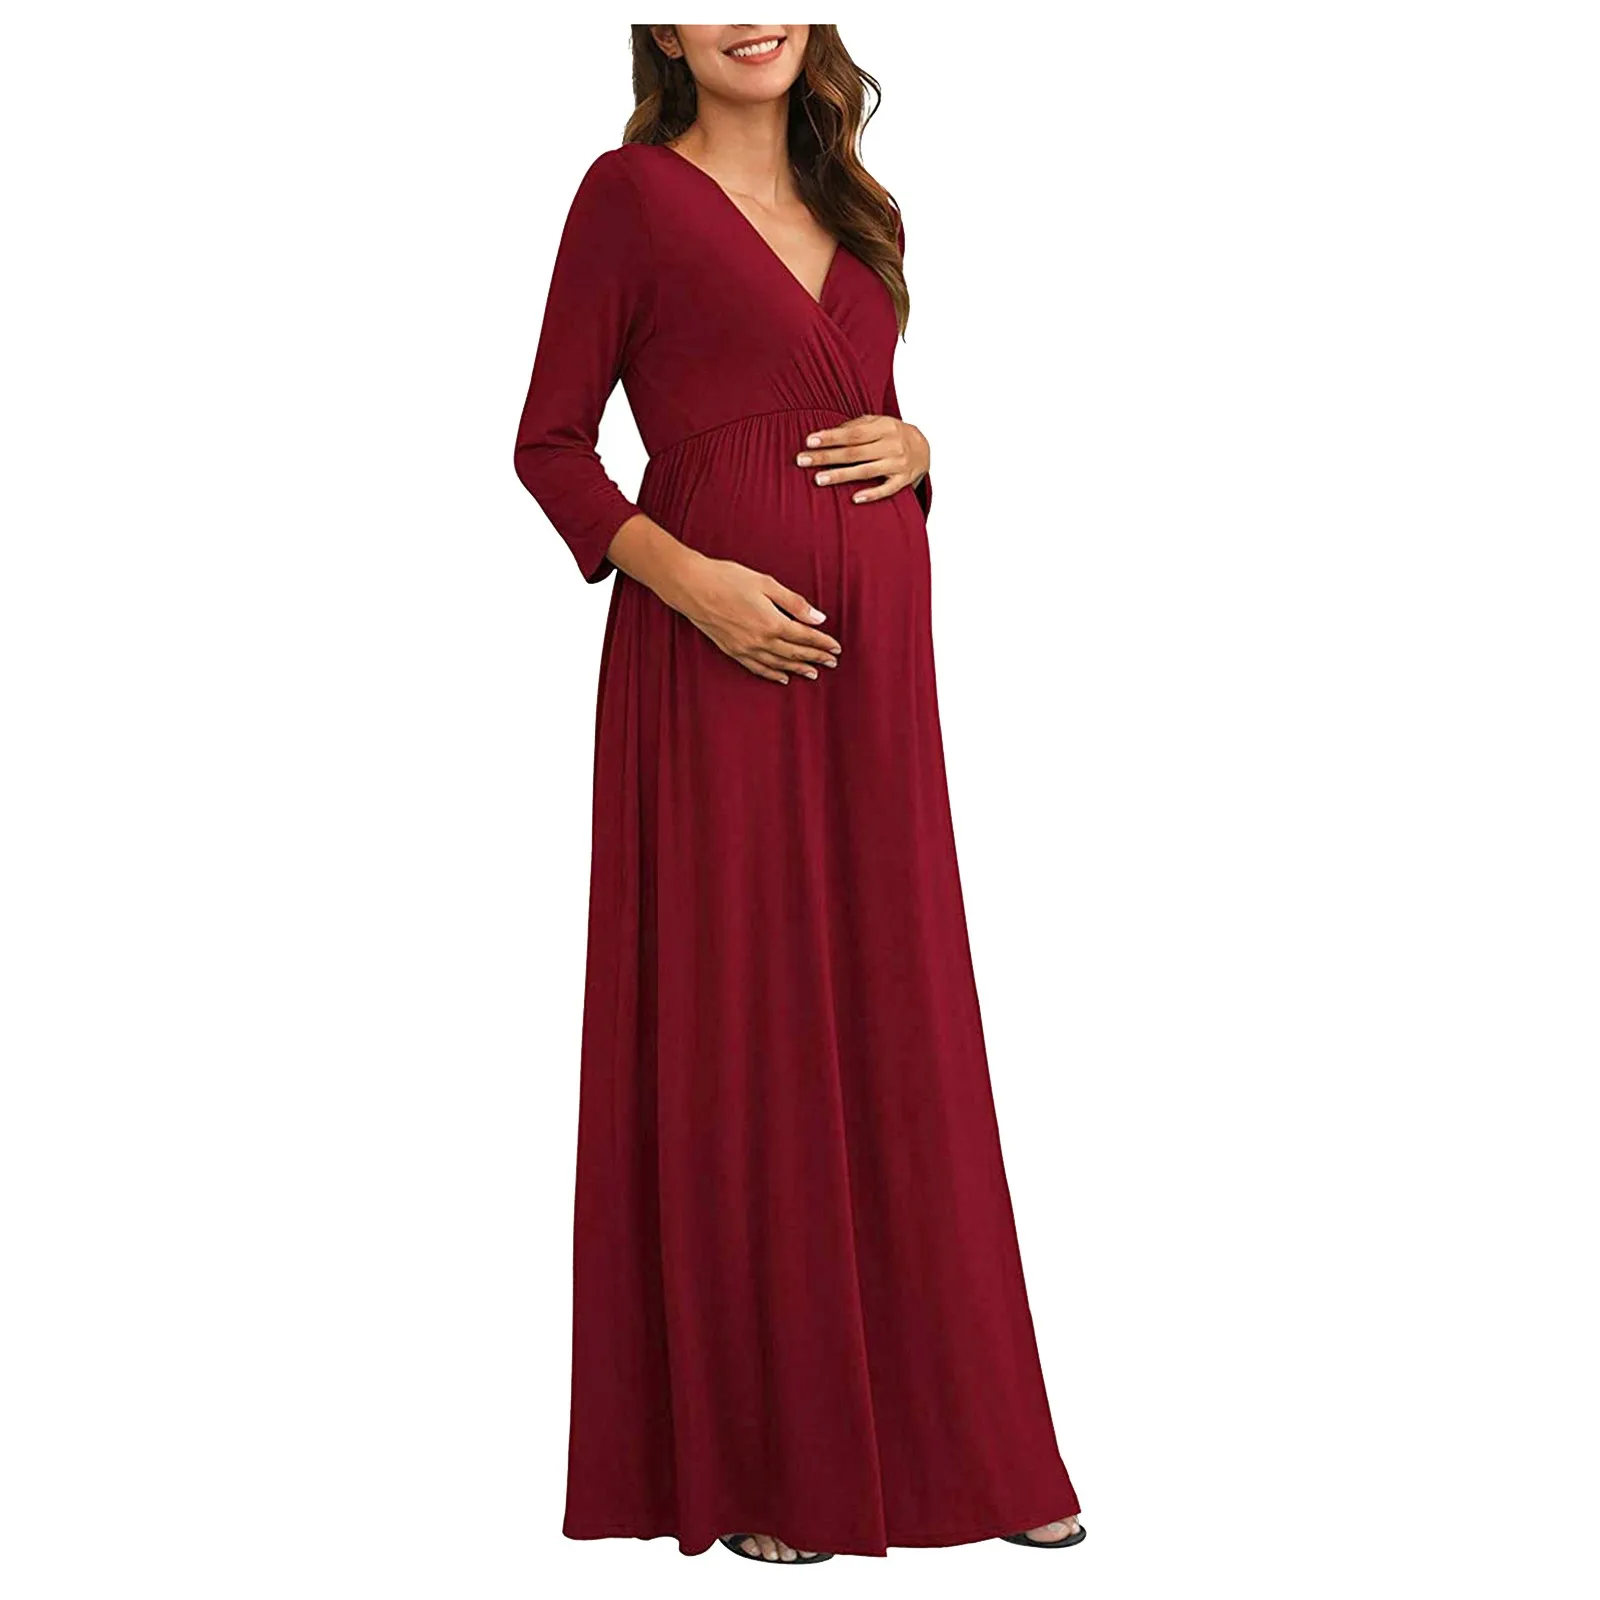 Moda Rochii de Maternitate одежда для беременных Sarcinii Casual 3/4 Sleeve V-neck Maxi Wrap Rochie Lunga Femeile Gravide Haine